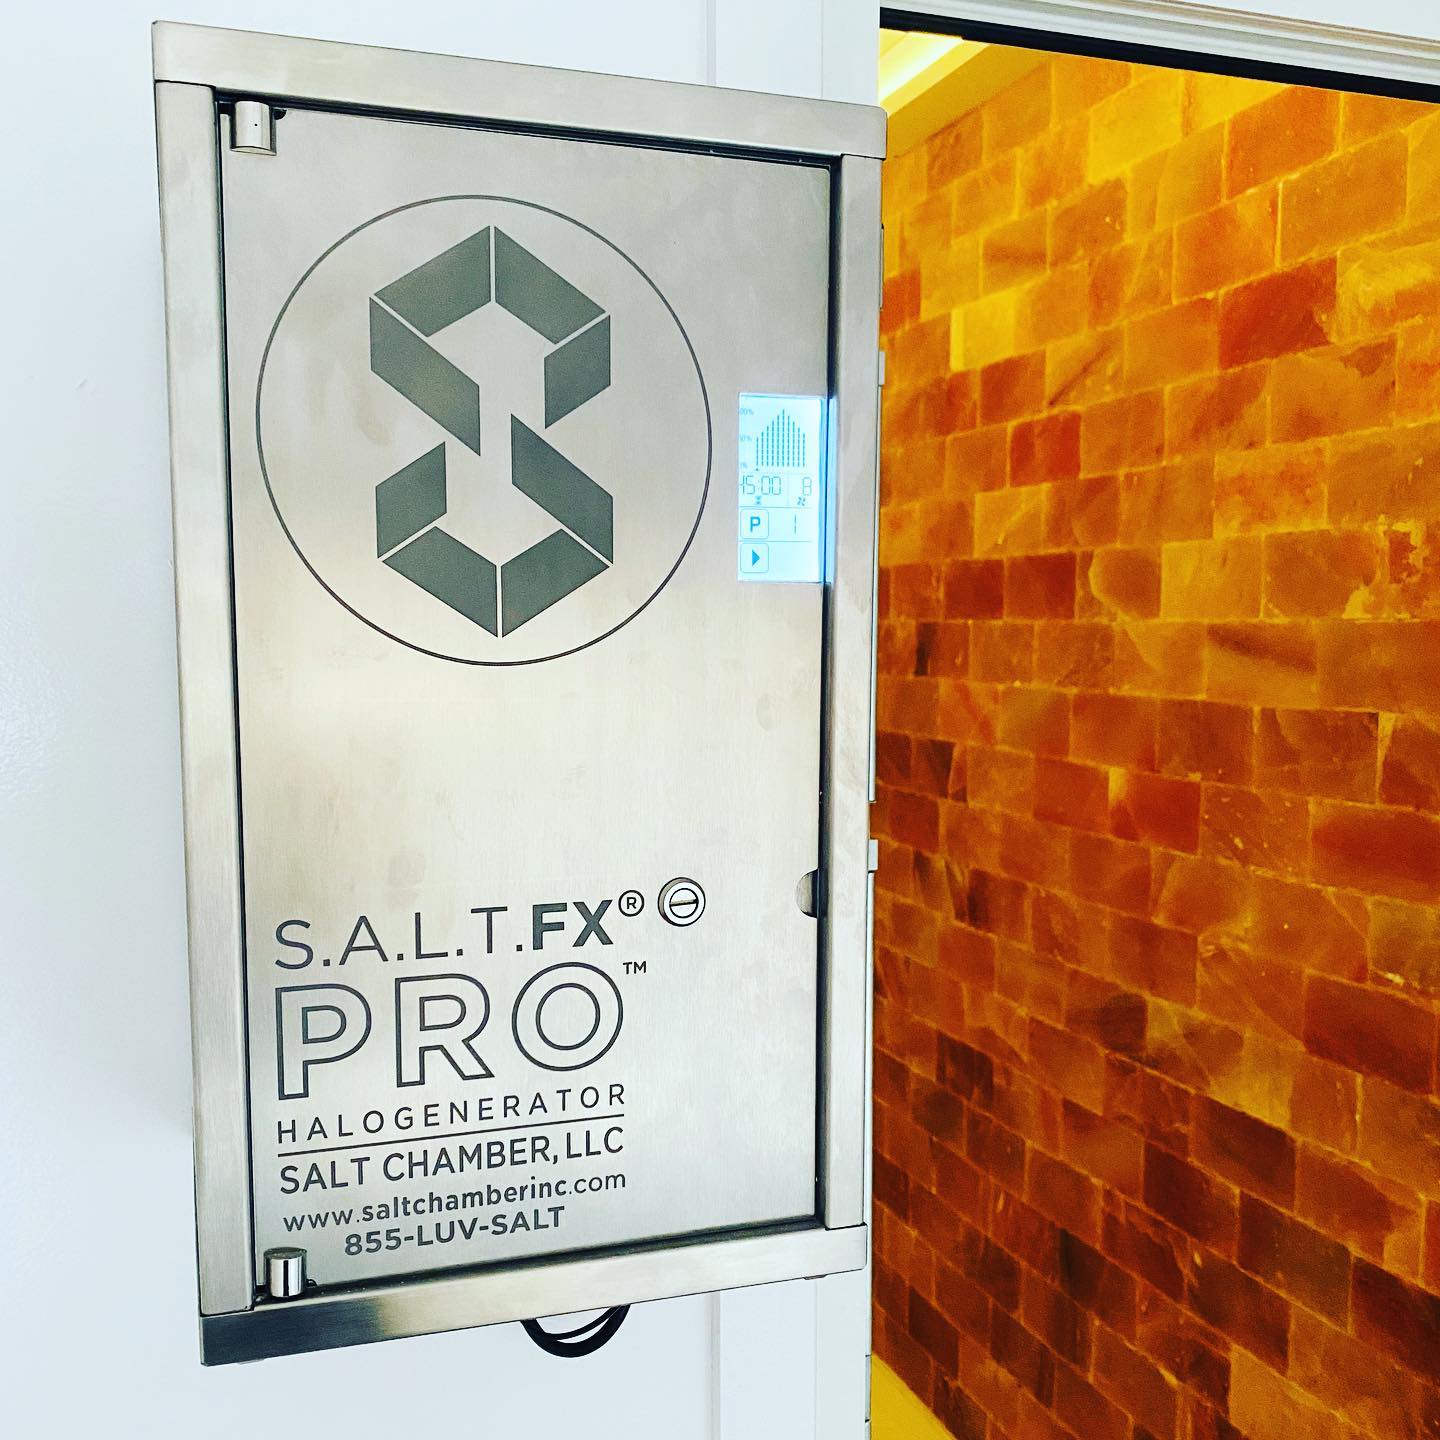 SALT FX Pro halogenerator in a salt therapy room.